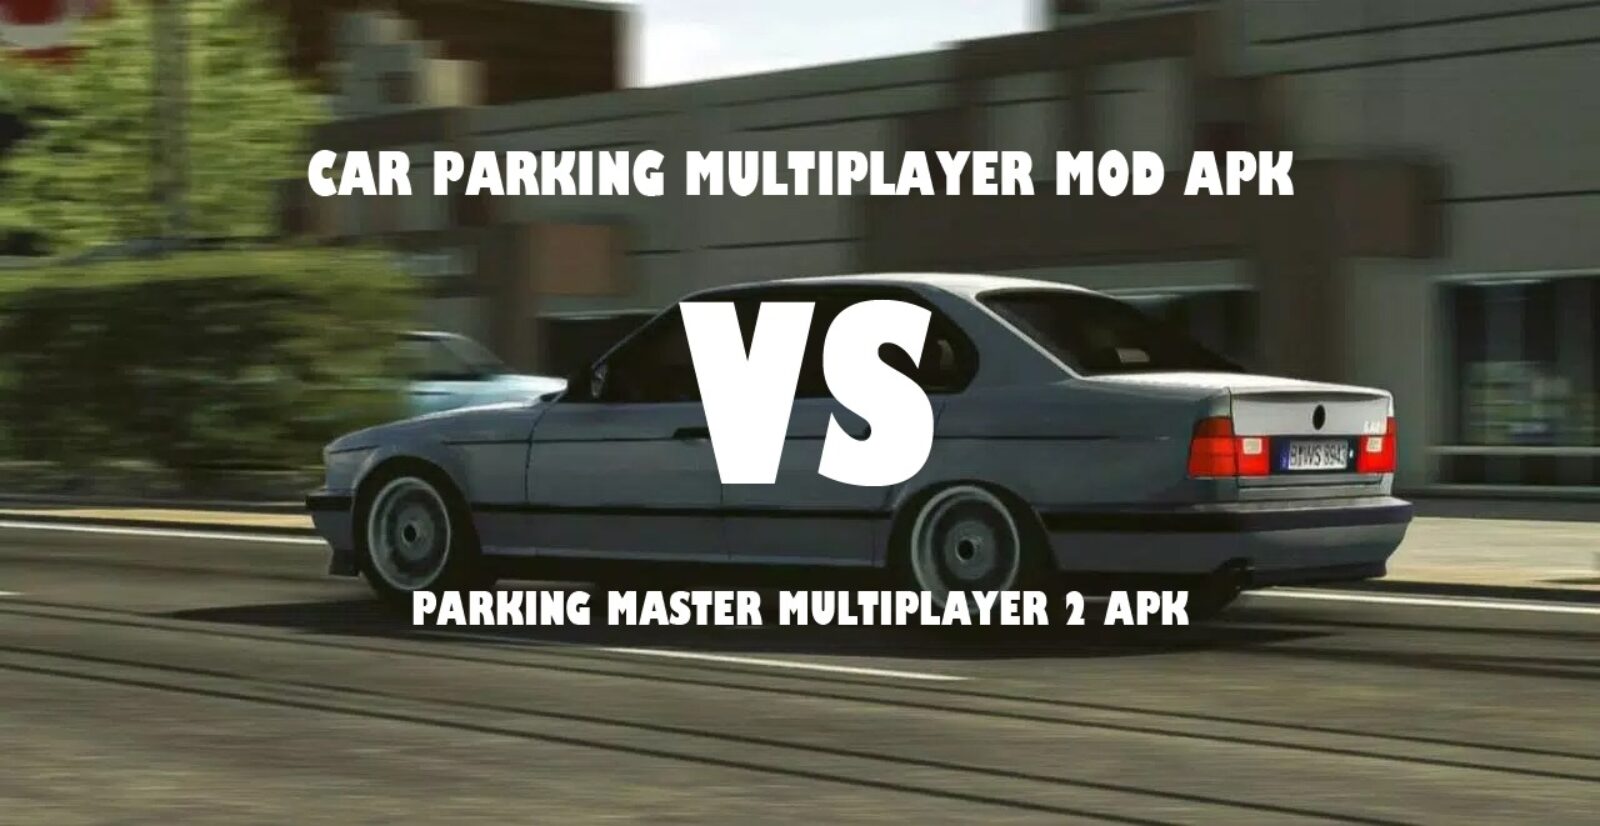 Car Parking Multiplayer Mod APK Vs. Parking Master Multiplayer 2 APK